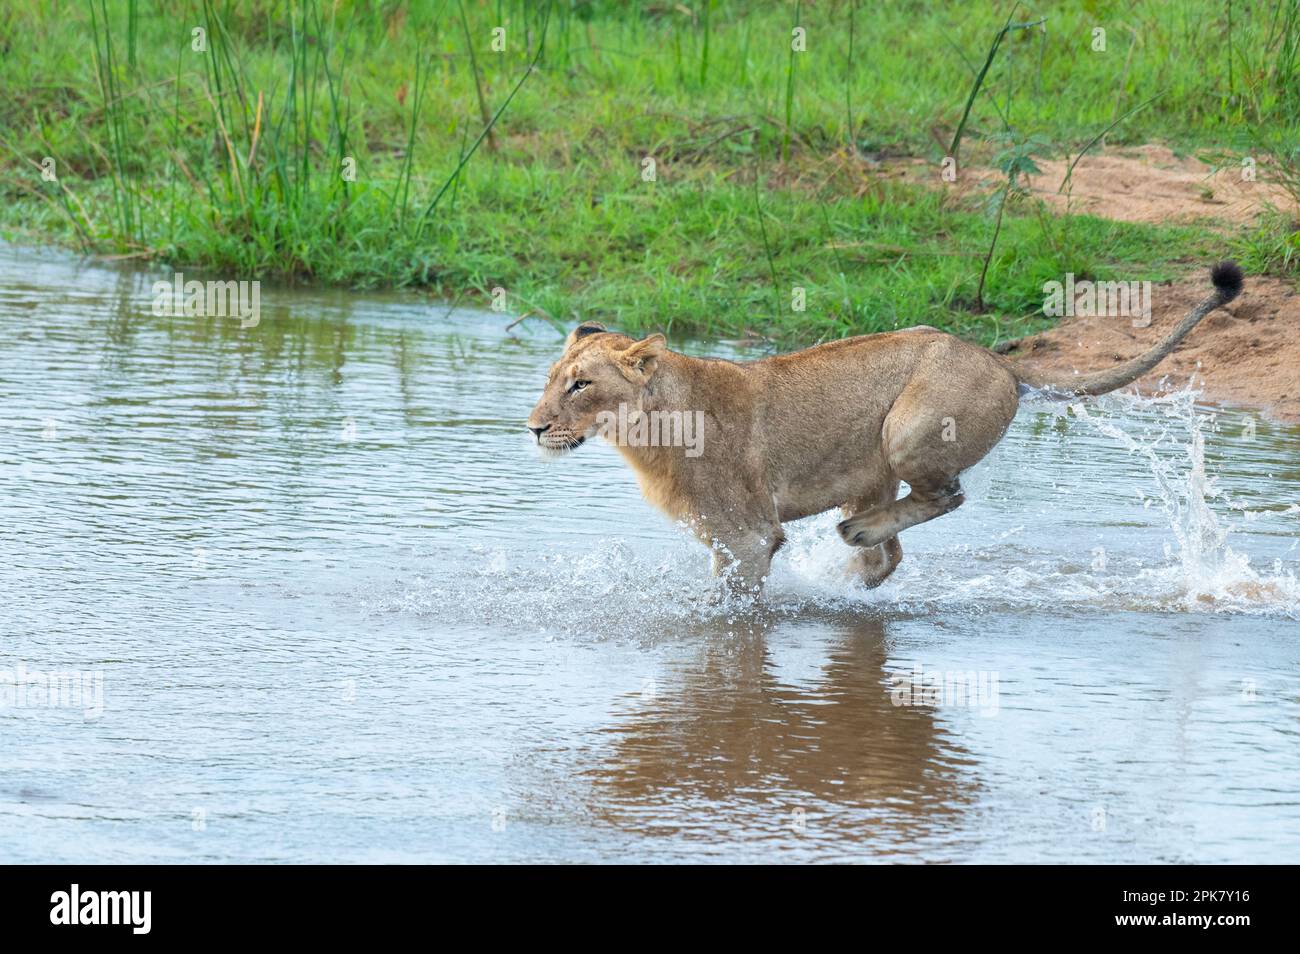 A lioness, Panthera leo, runs through a river. Stock Photo